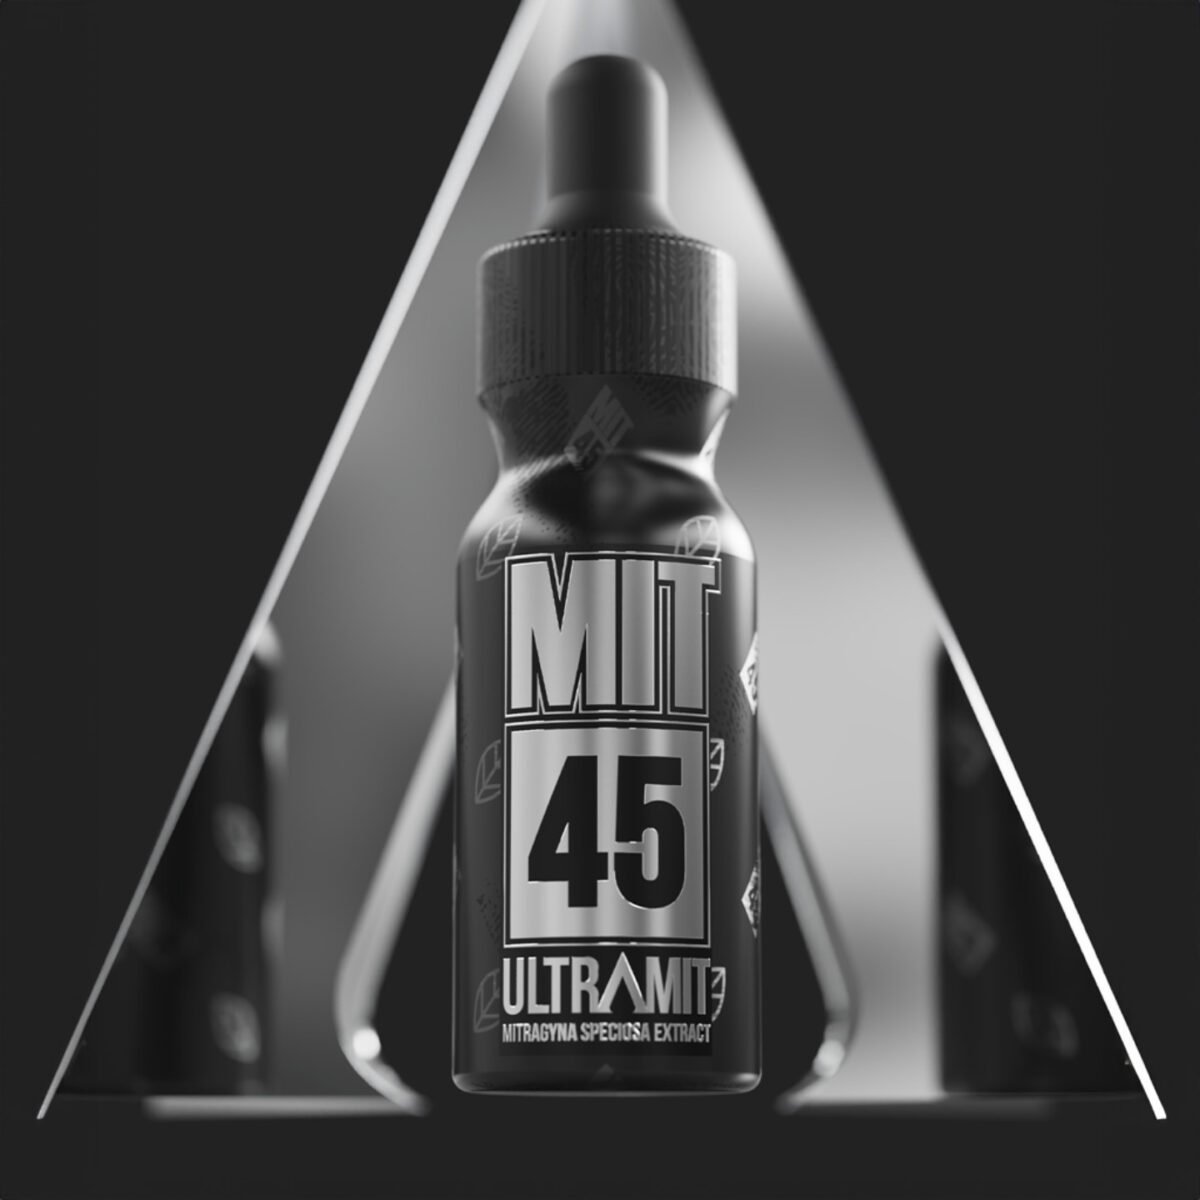 MIT45 UltraMIT Kratom Extract Shot – 15ml